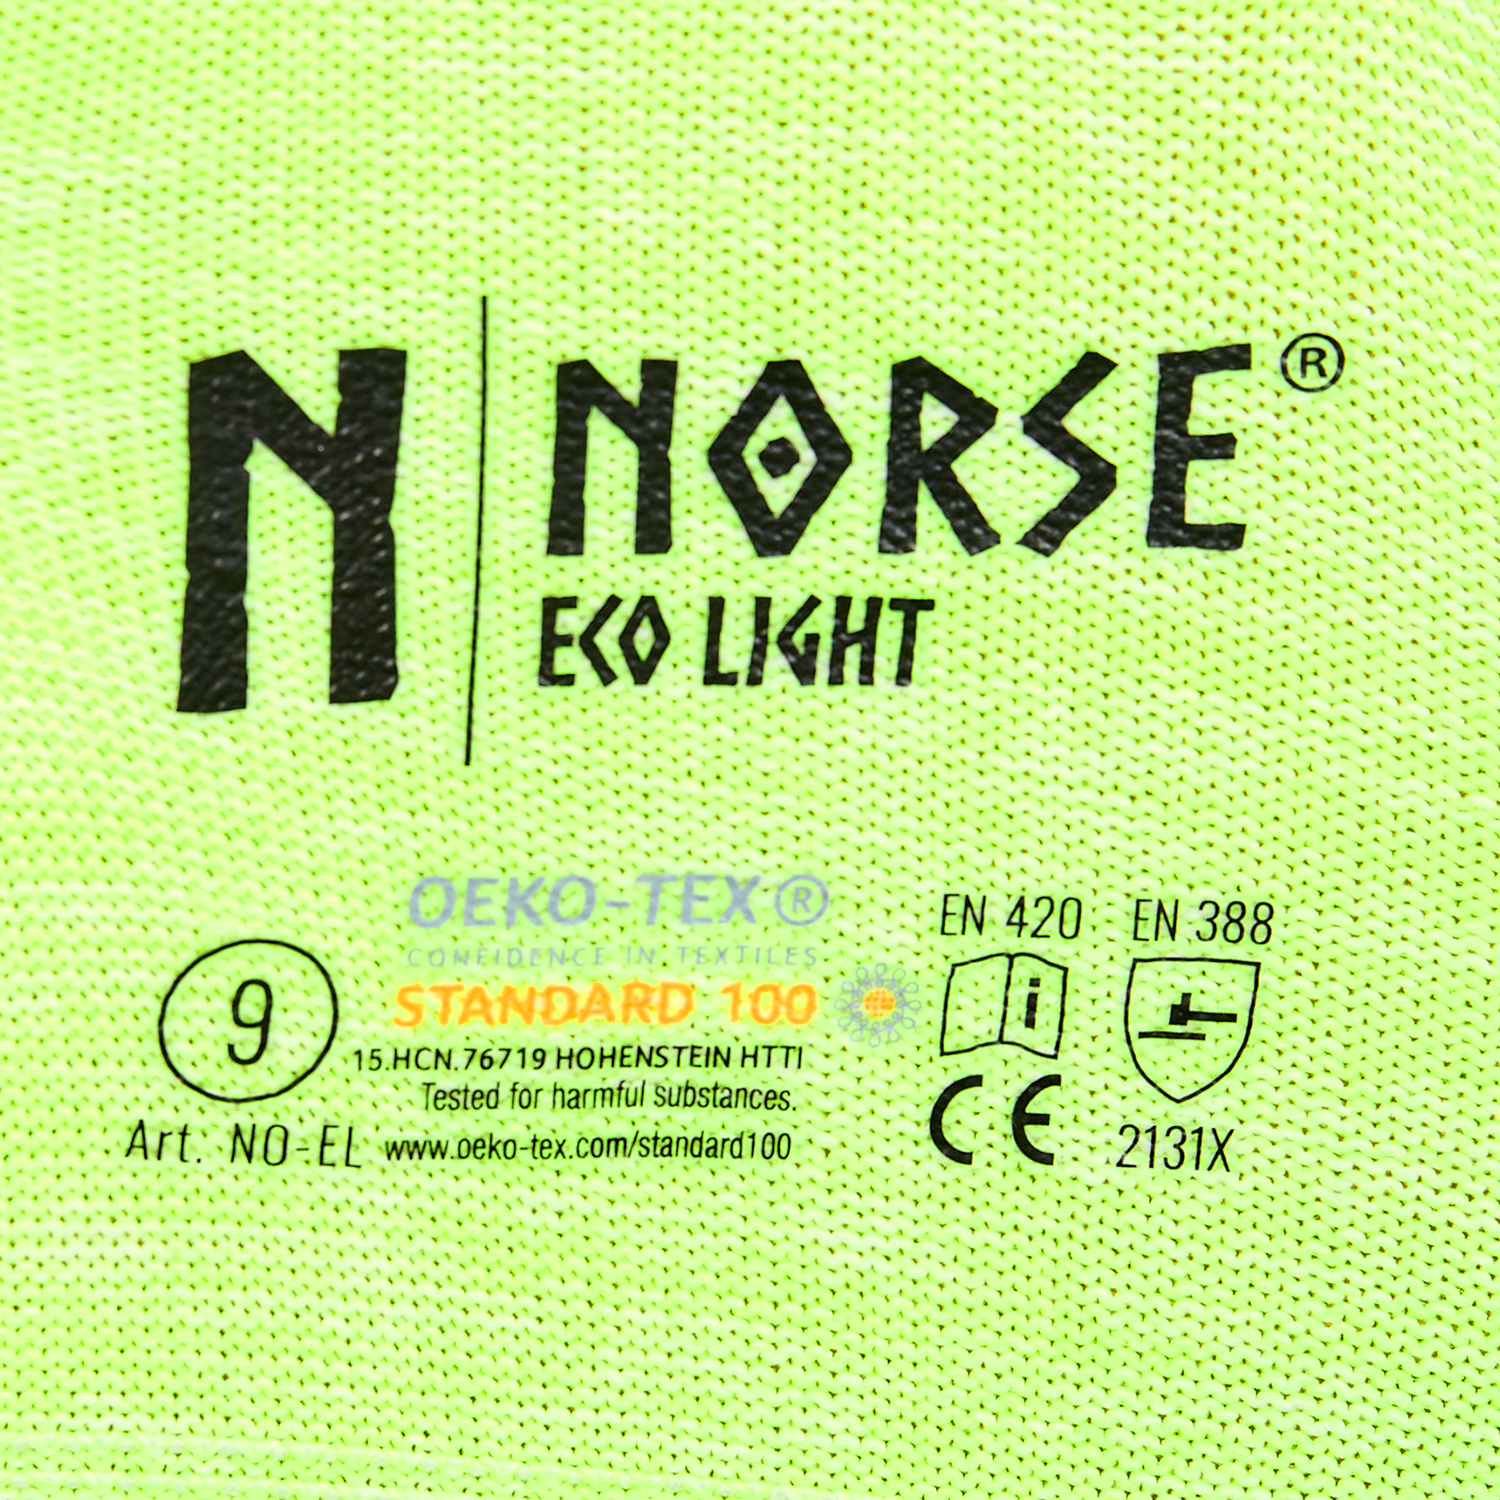 NORSE Eco Light assembly gloves size 10